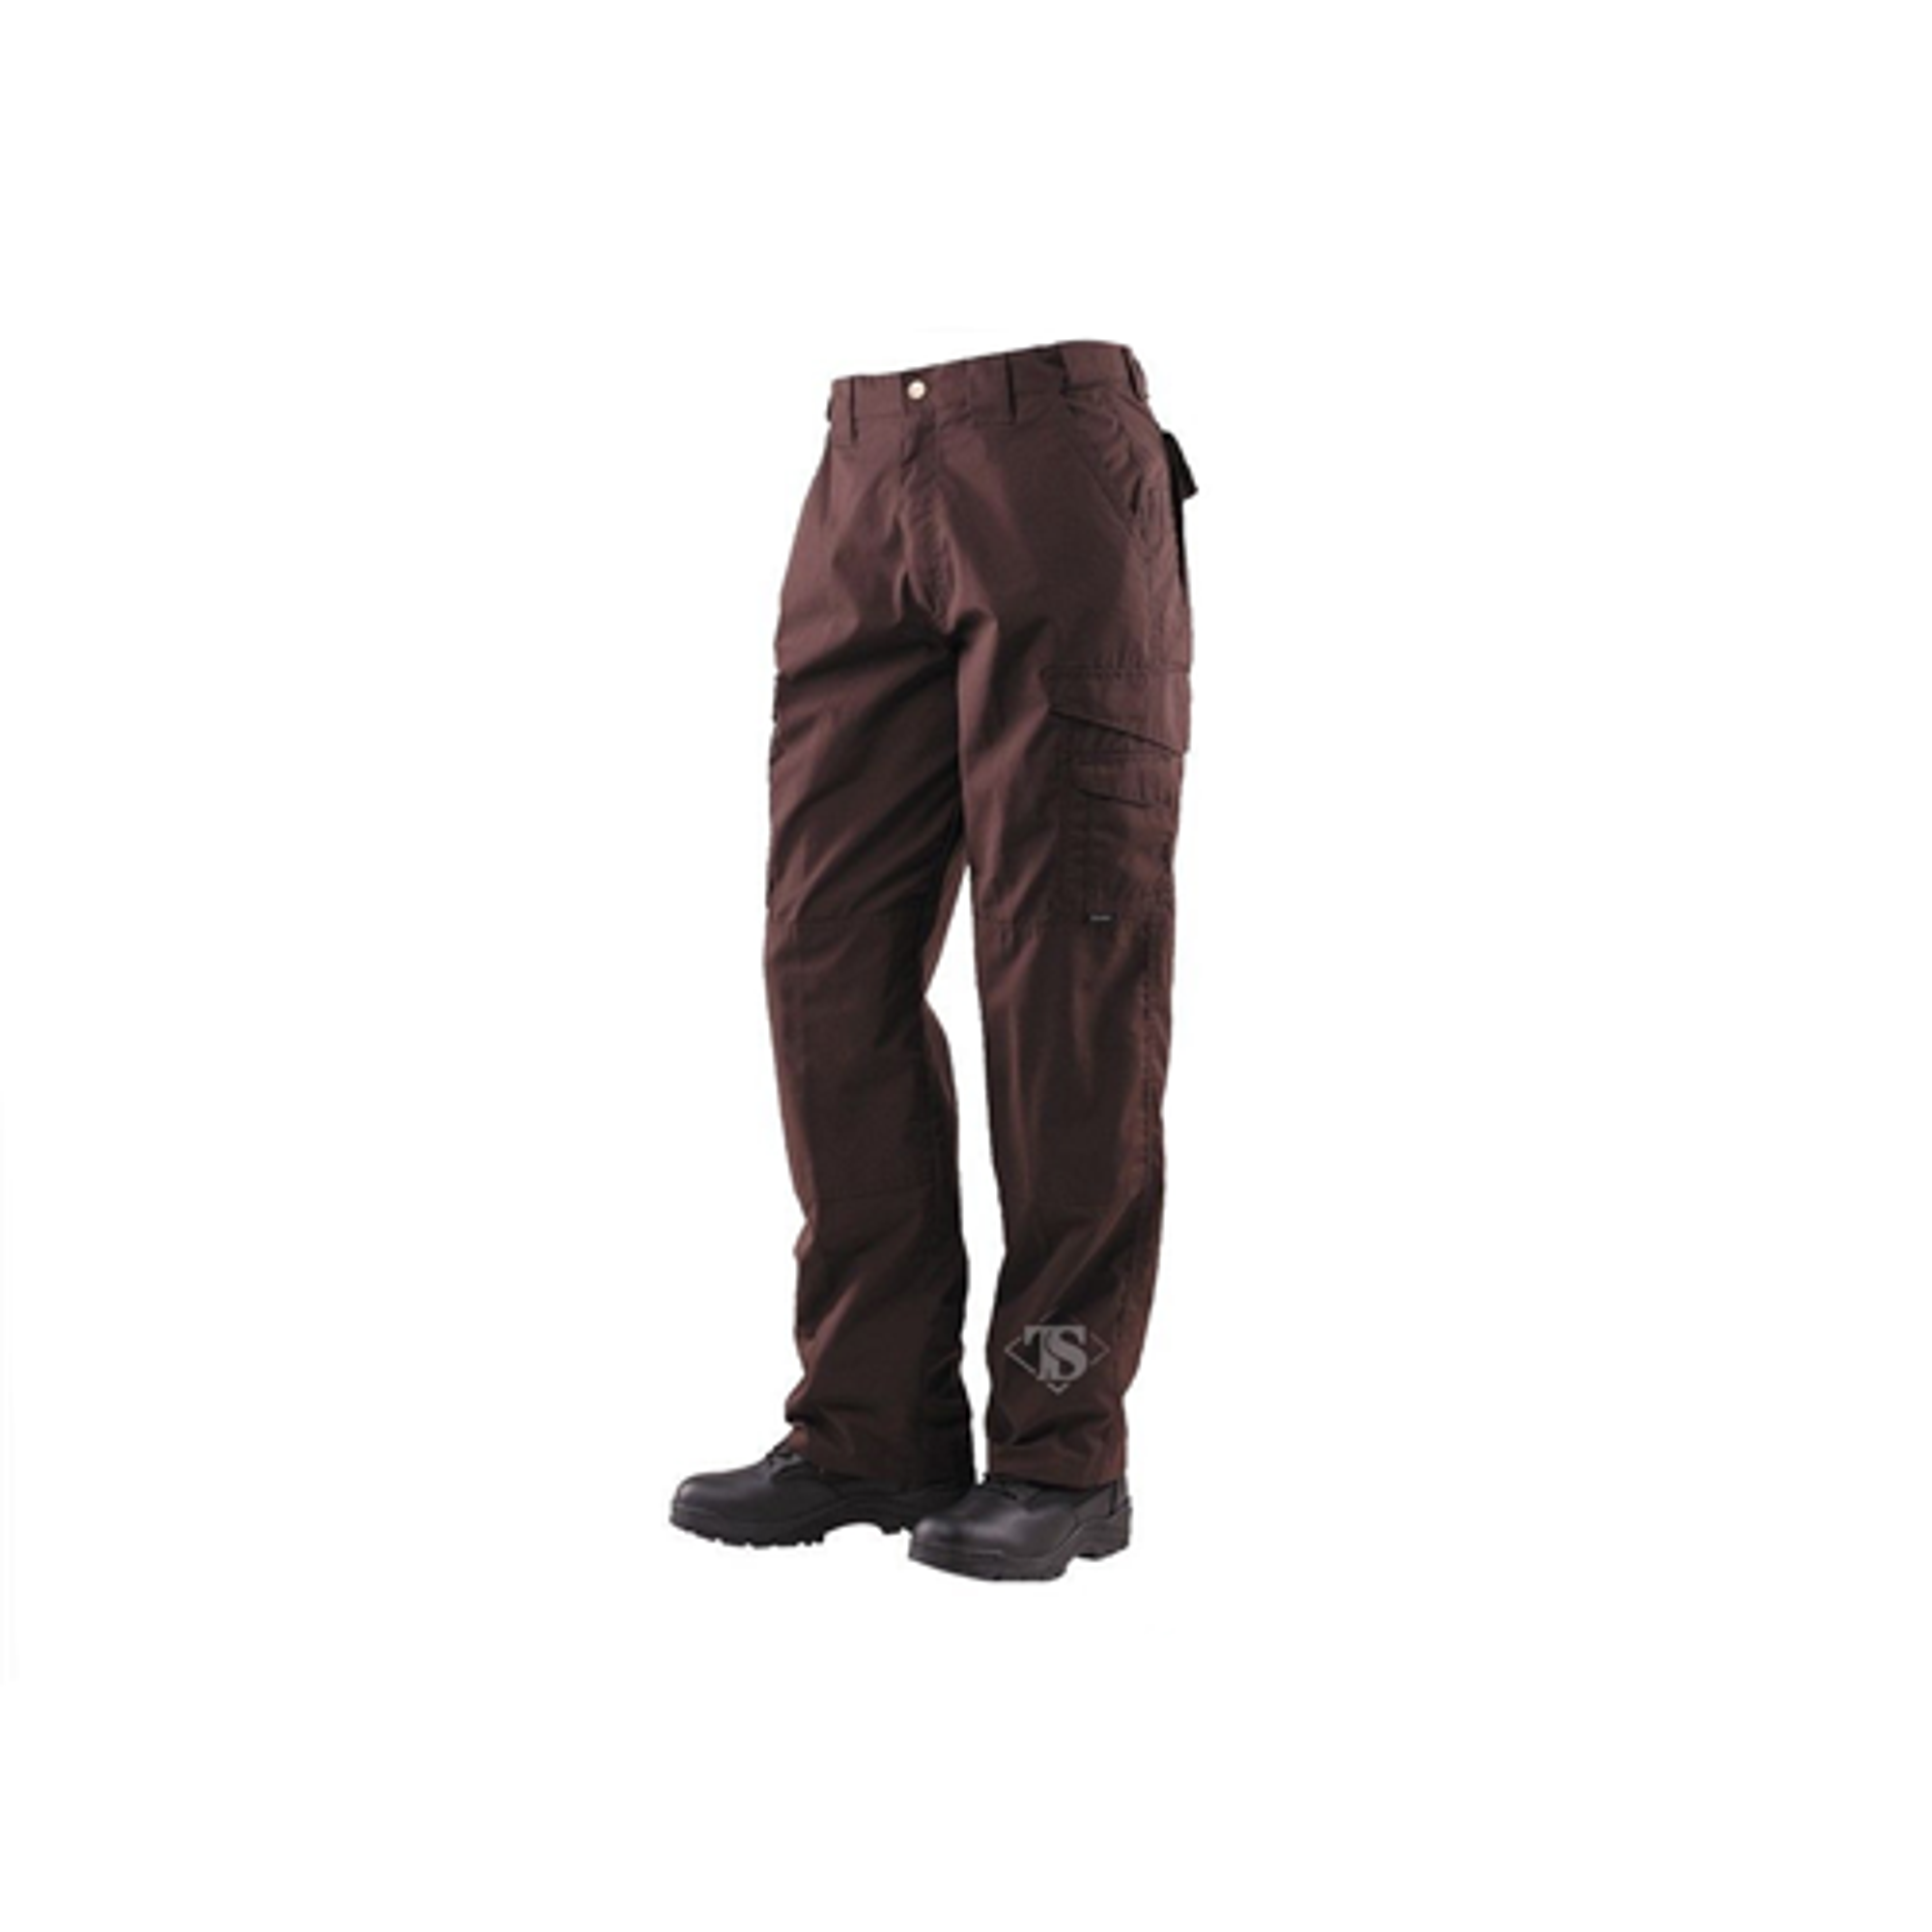 24-7 Original Tactical Pants - 6.5oz - Brown - KRTSP-1065046